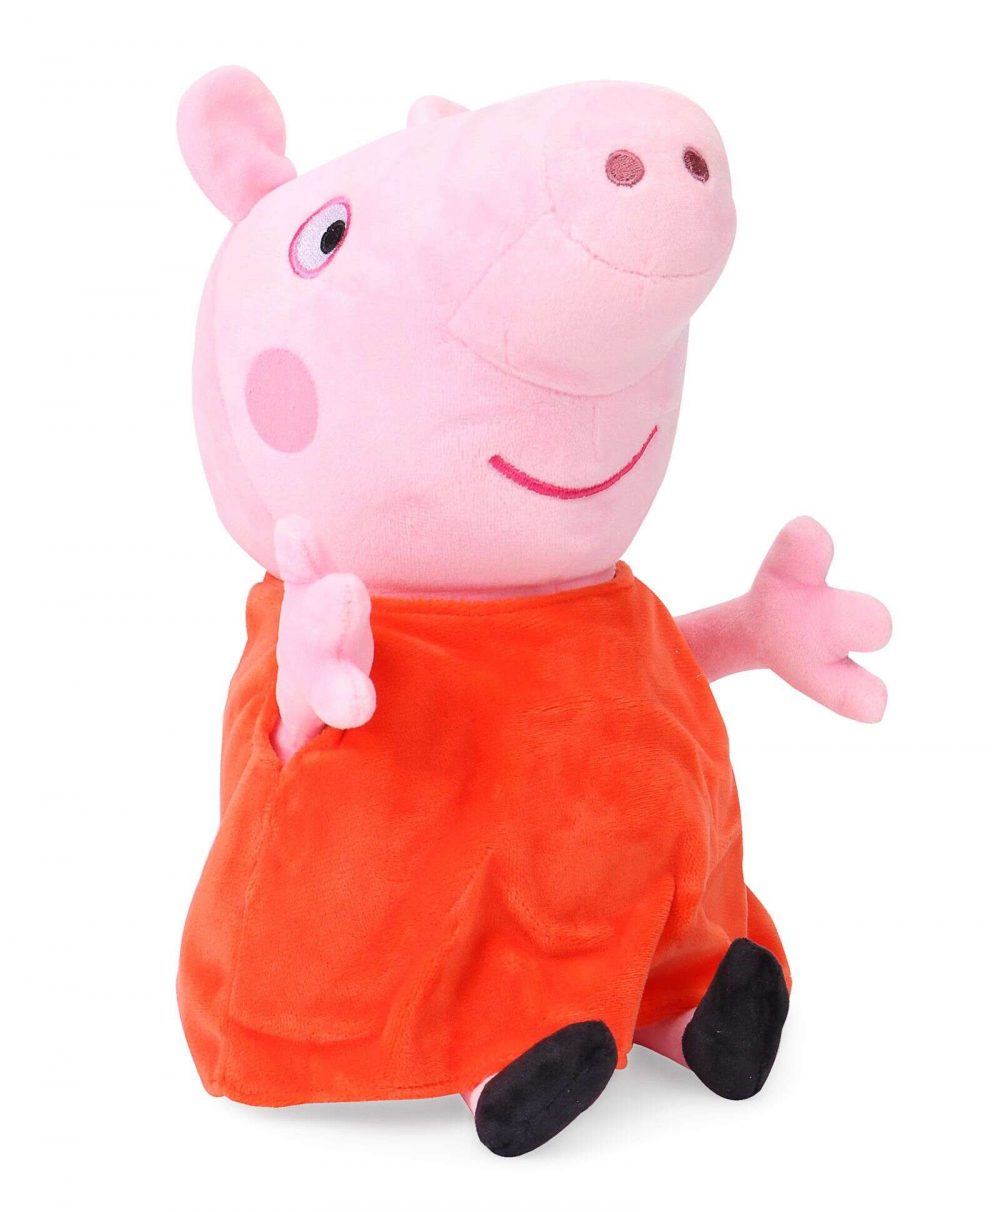 Peppa Pig Plush - 19 cm Soft Toy Hanging (Orange) | Peppa Pig